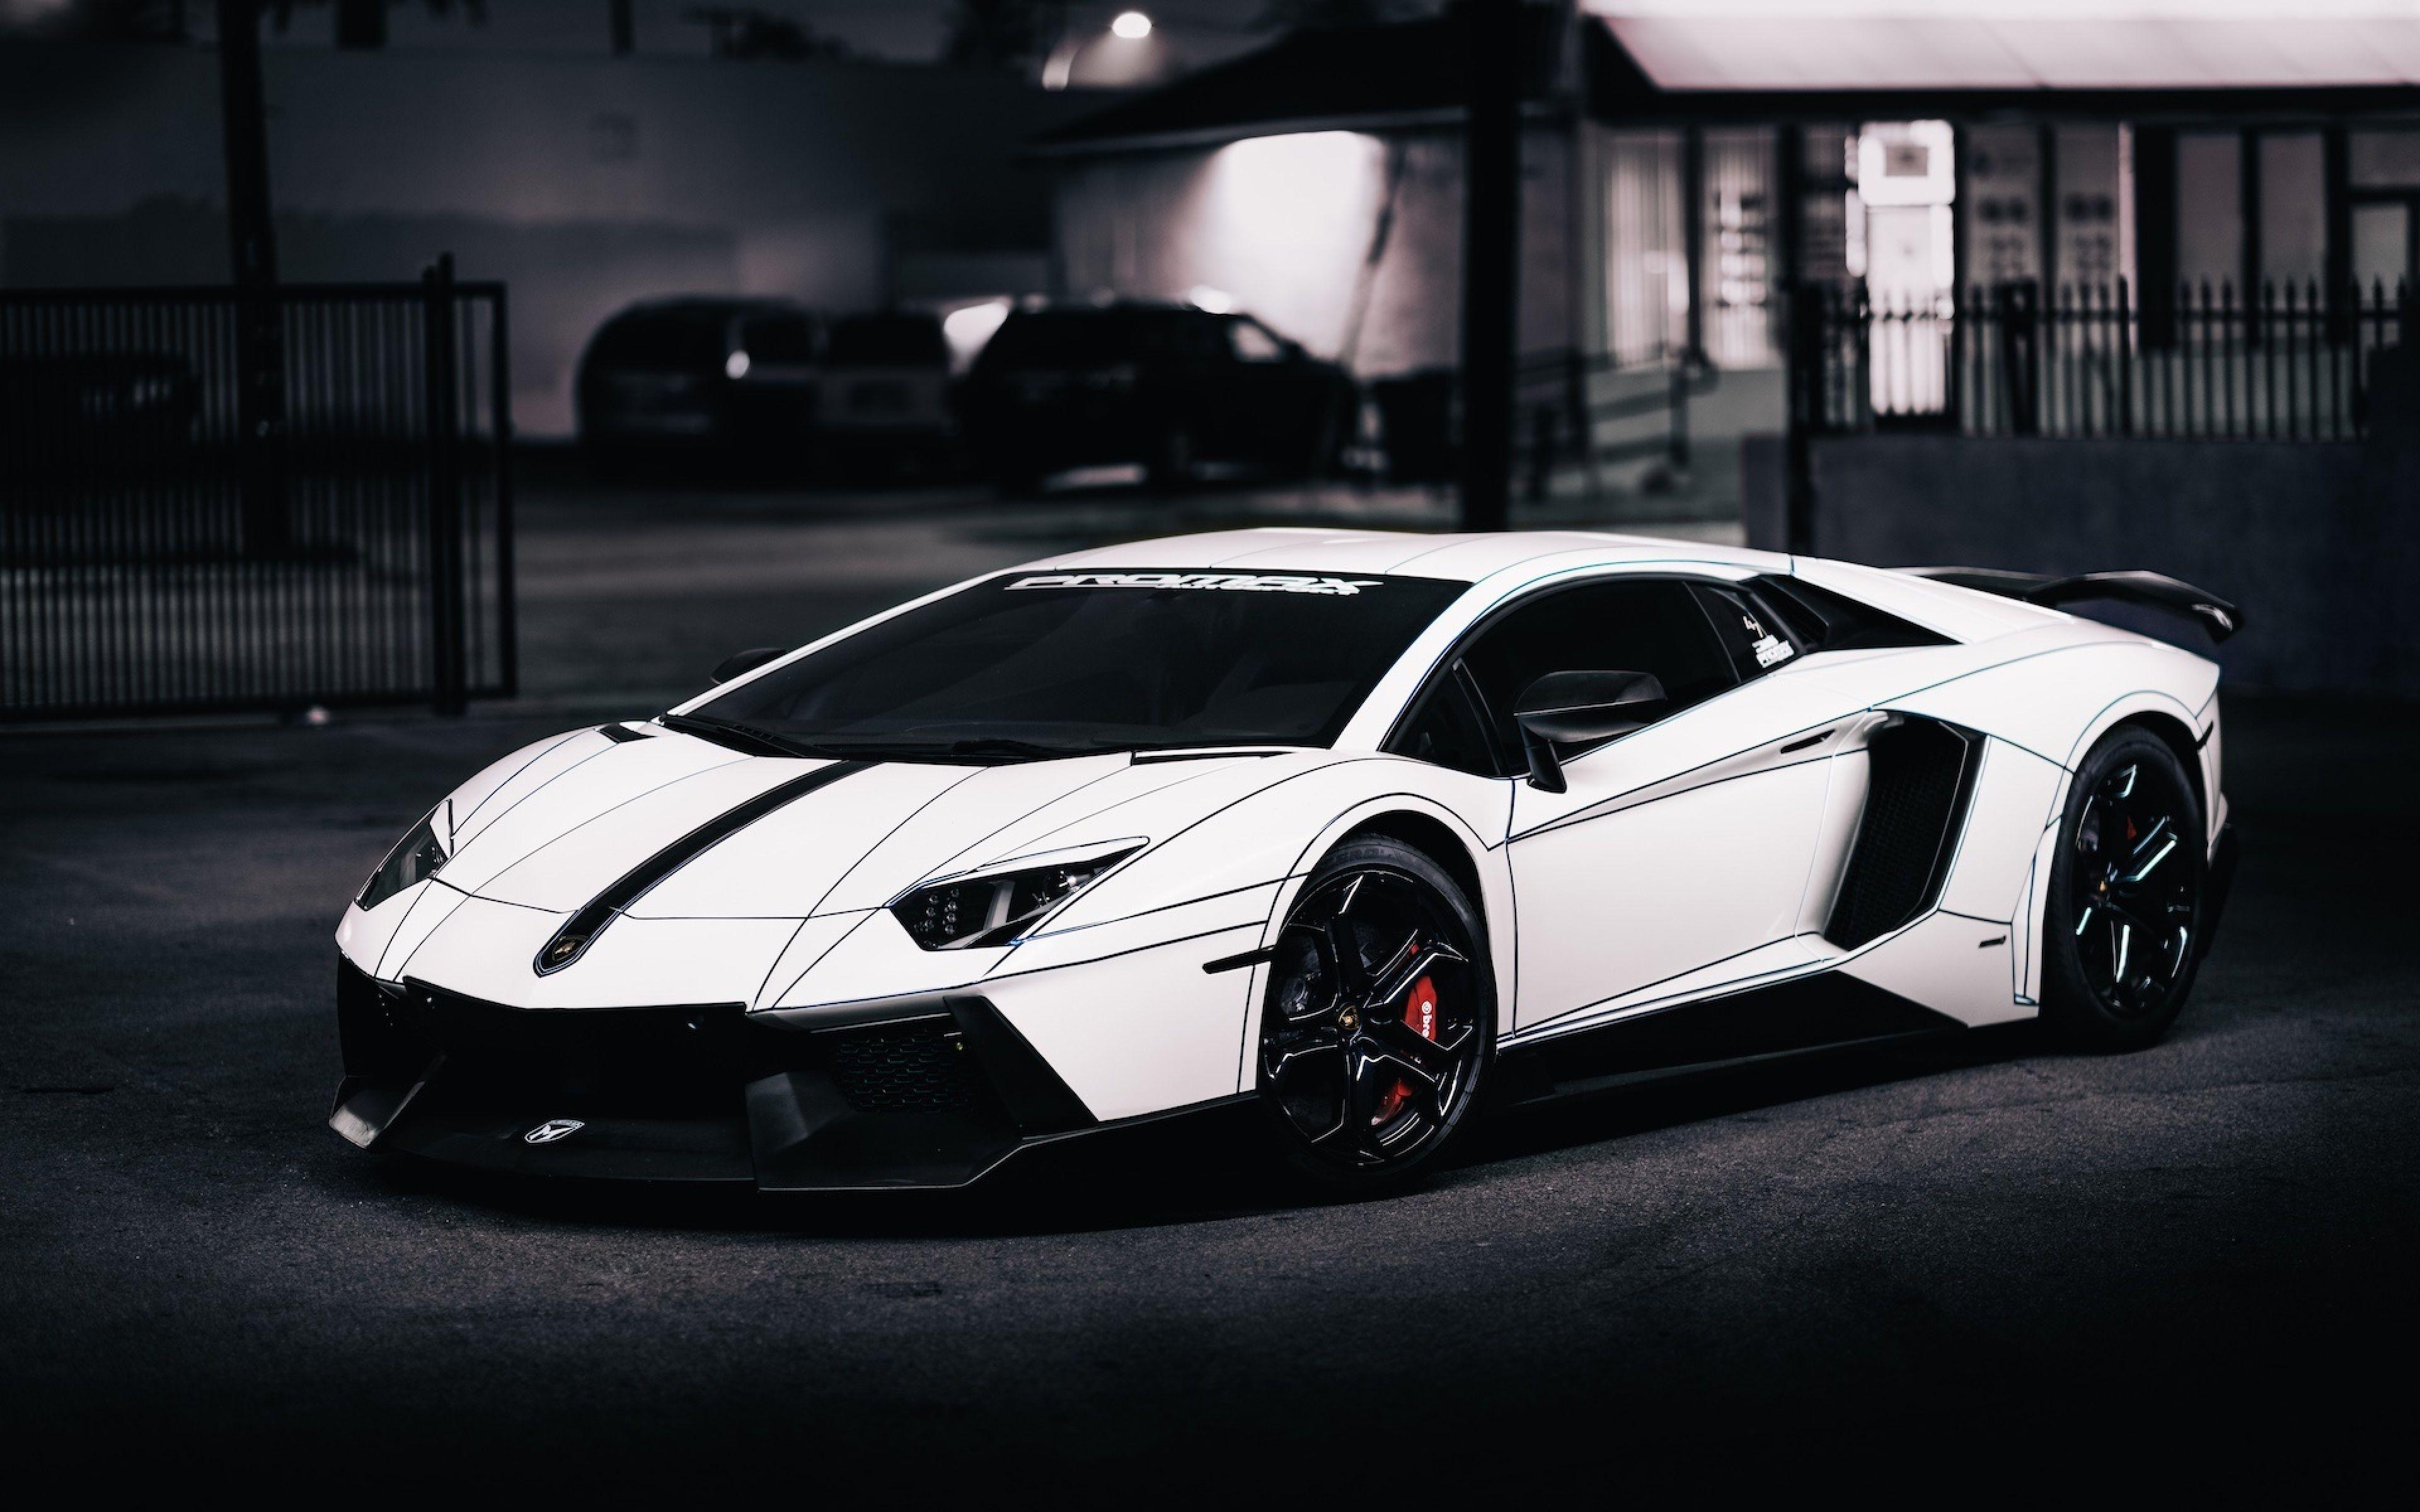 Hd Image Of Lamborghini